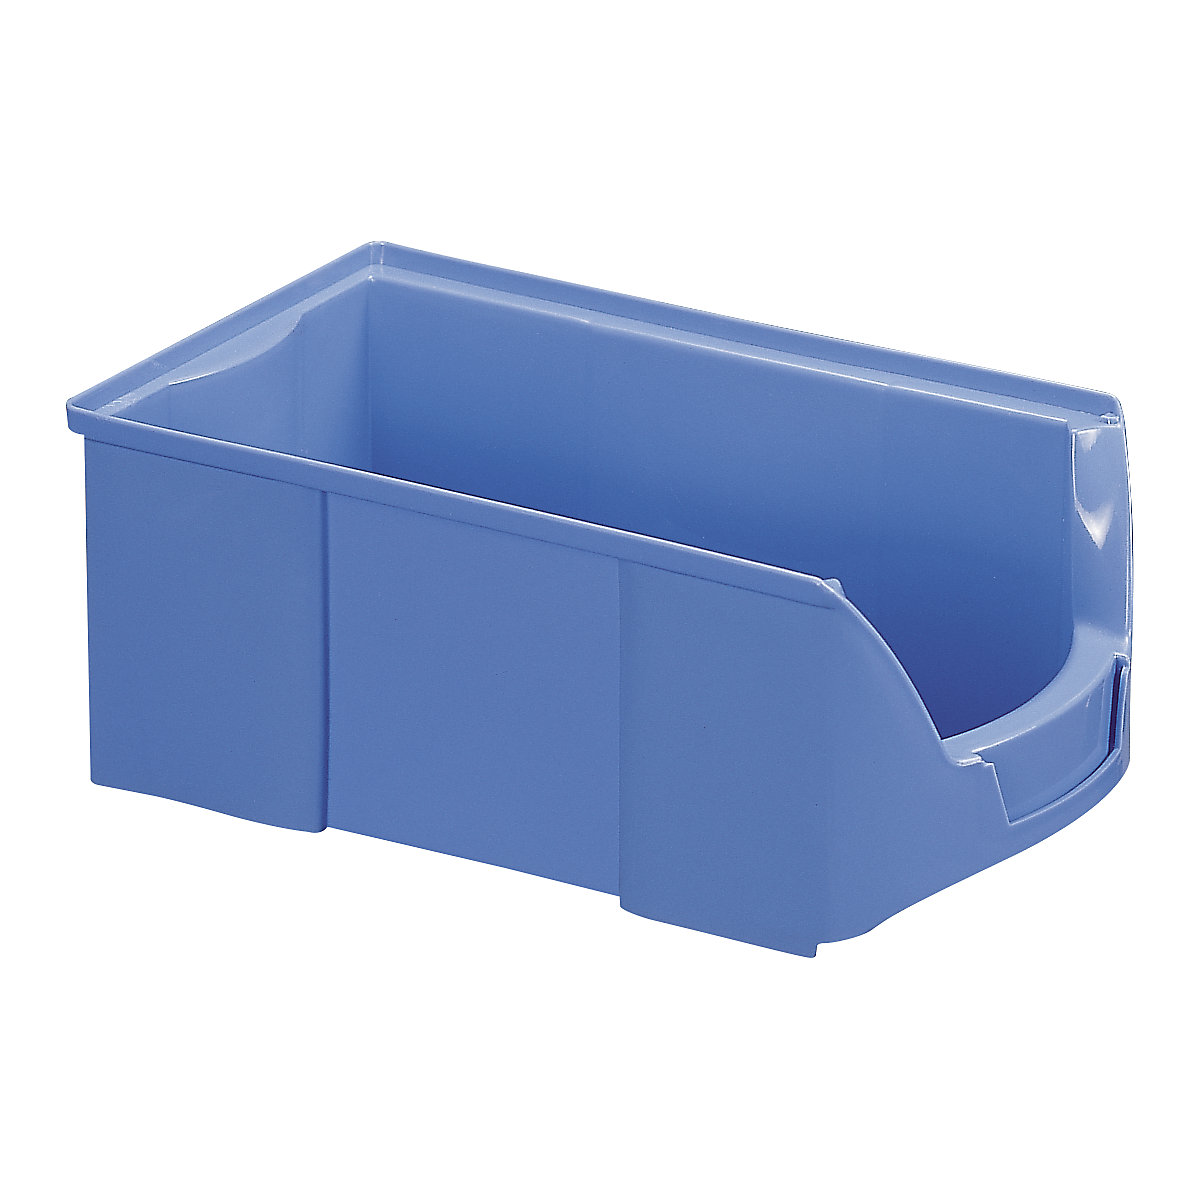 FUTURA-magazijnbak van polyethyleen, l x b x h = 510 x 310 x 201 mm, VE = 6 stuks, blauw